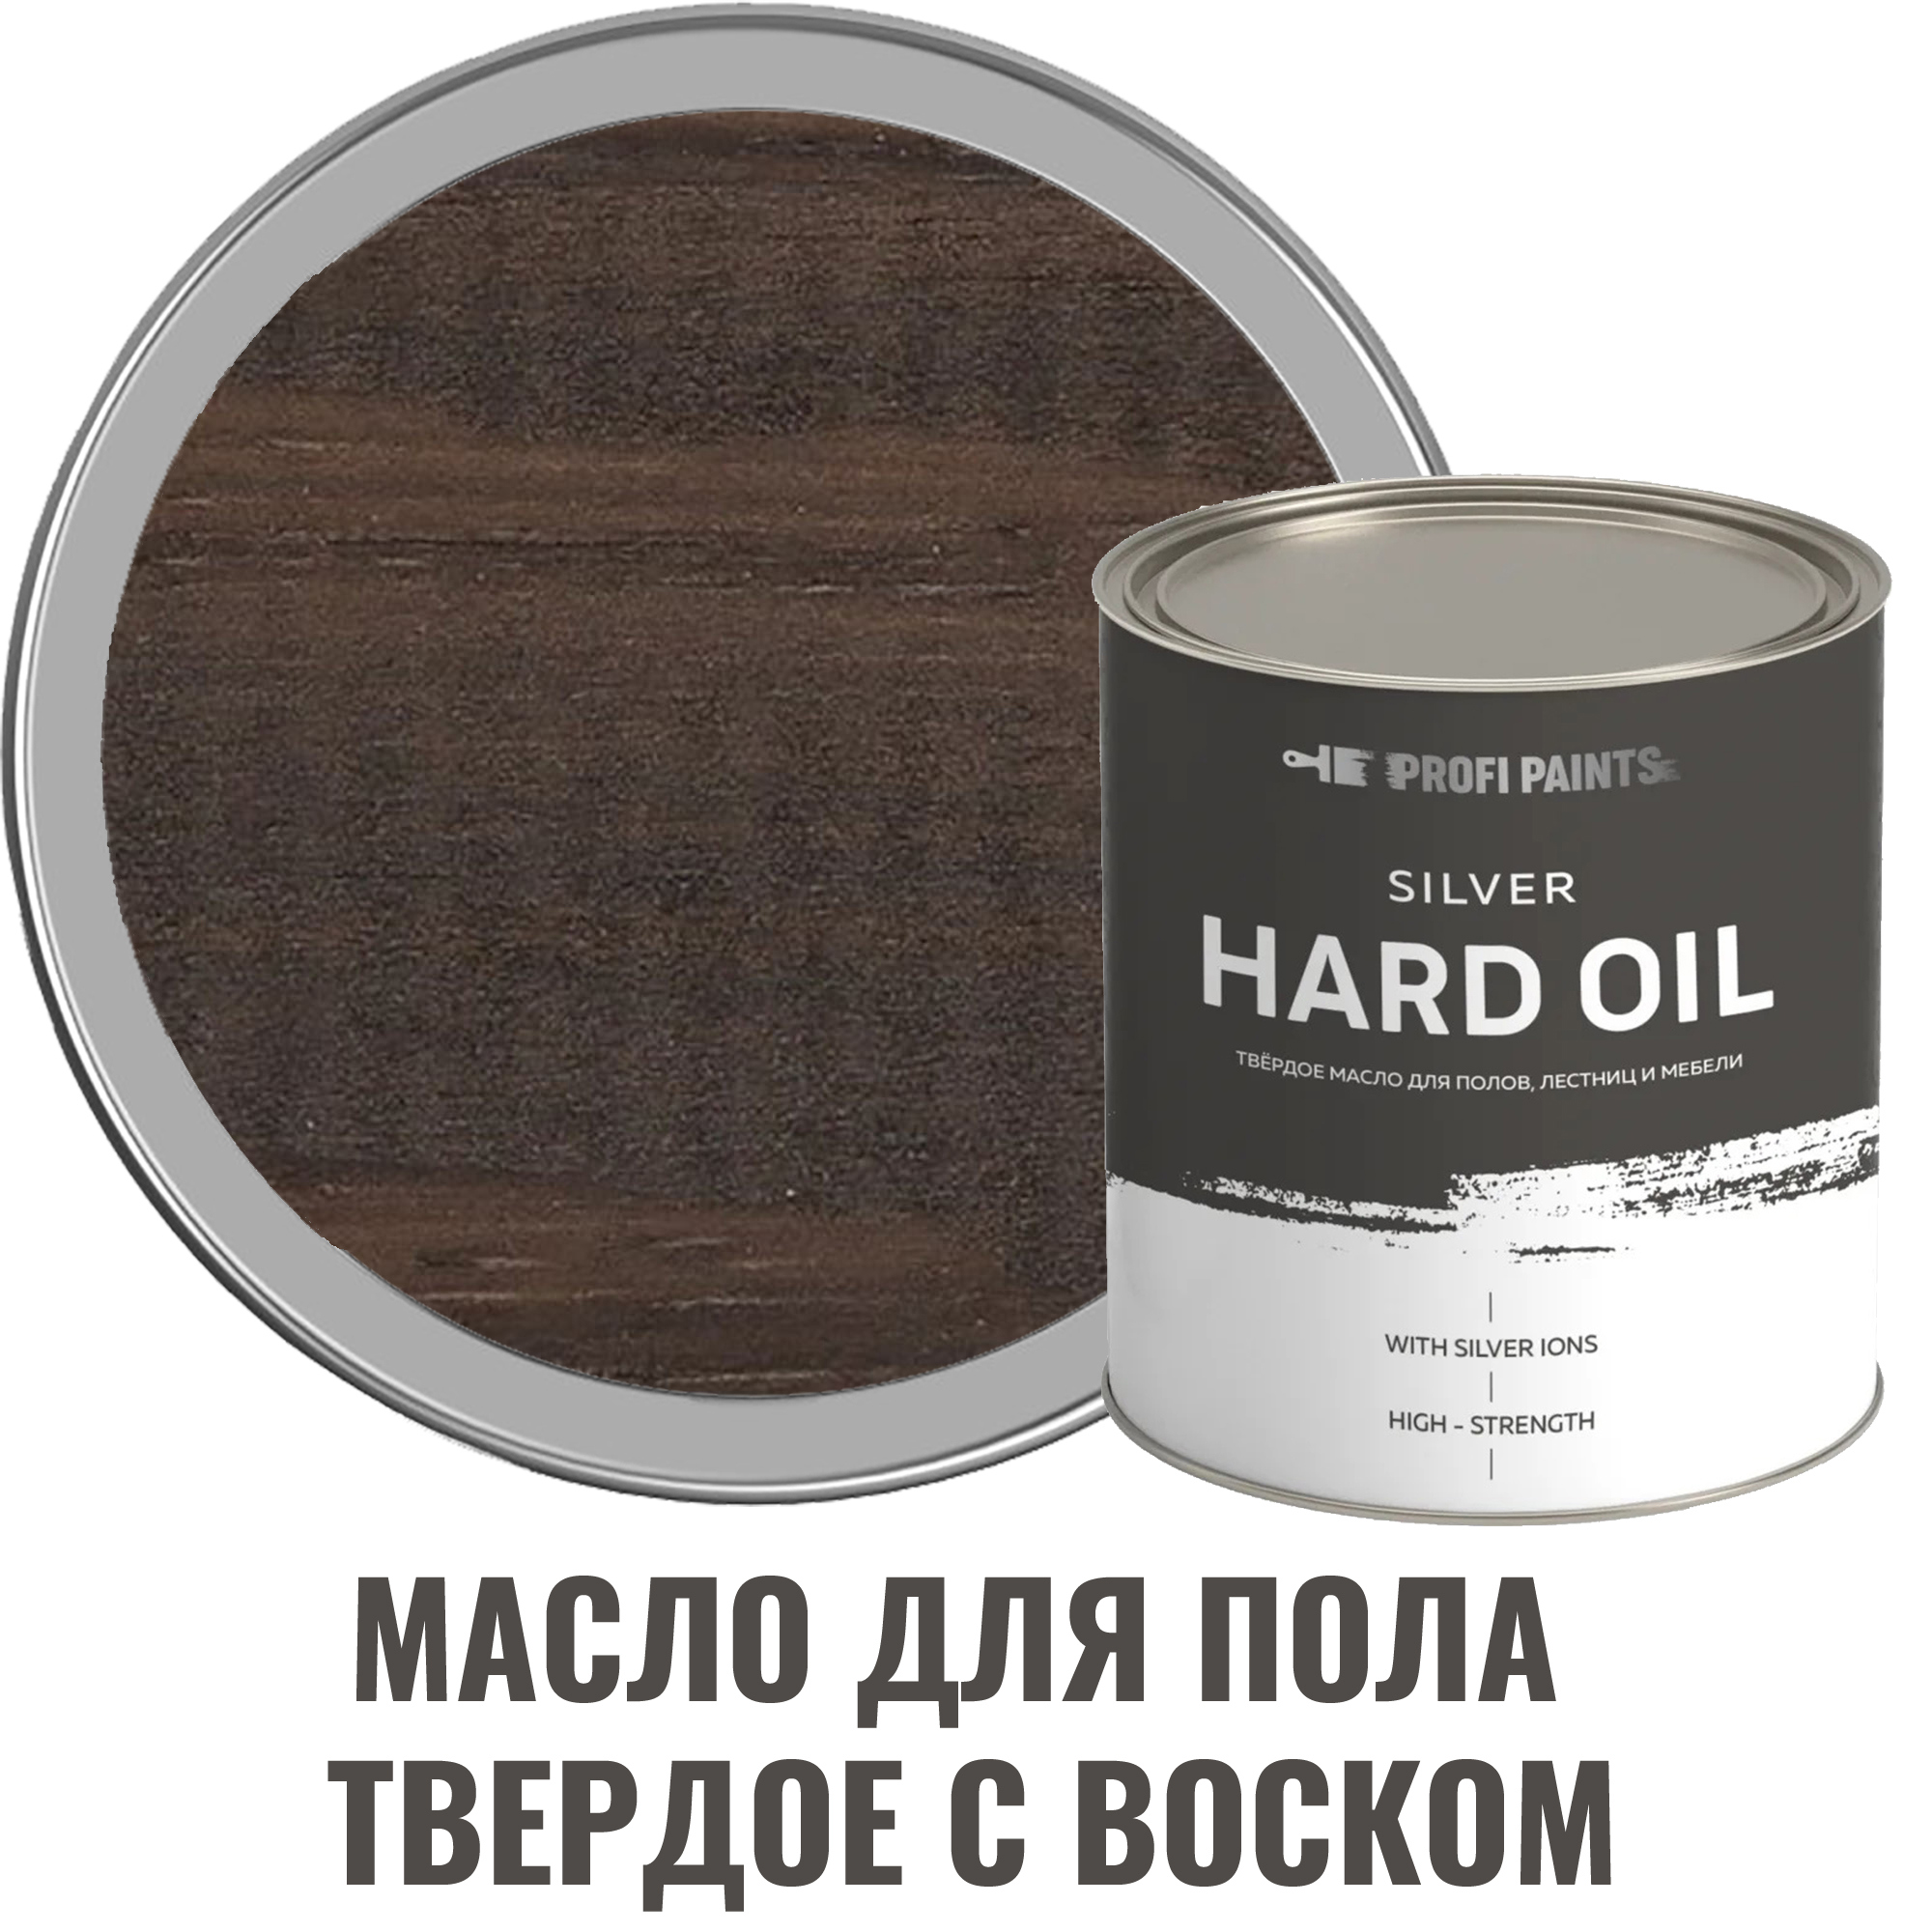 91095467 Масло для пола 10730_D Silver Hard Oil цвет серо-коричневый 0.9 л STLM-0481825 PROFIPAINTS